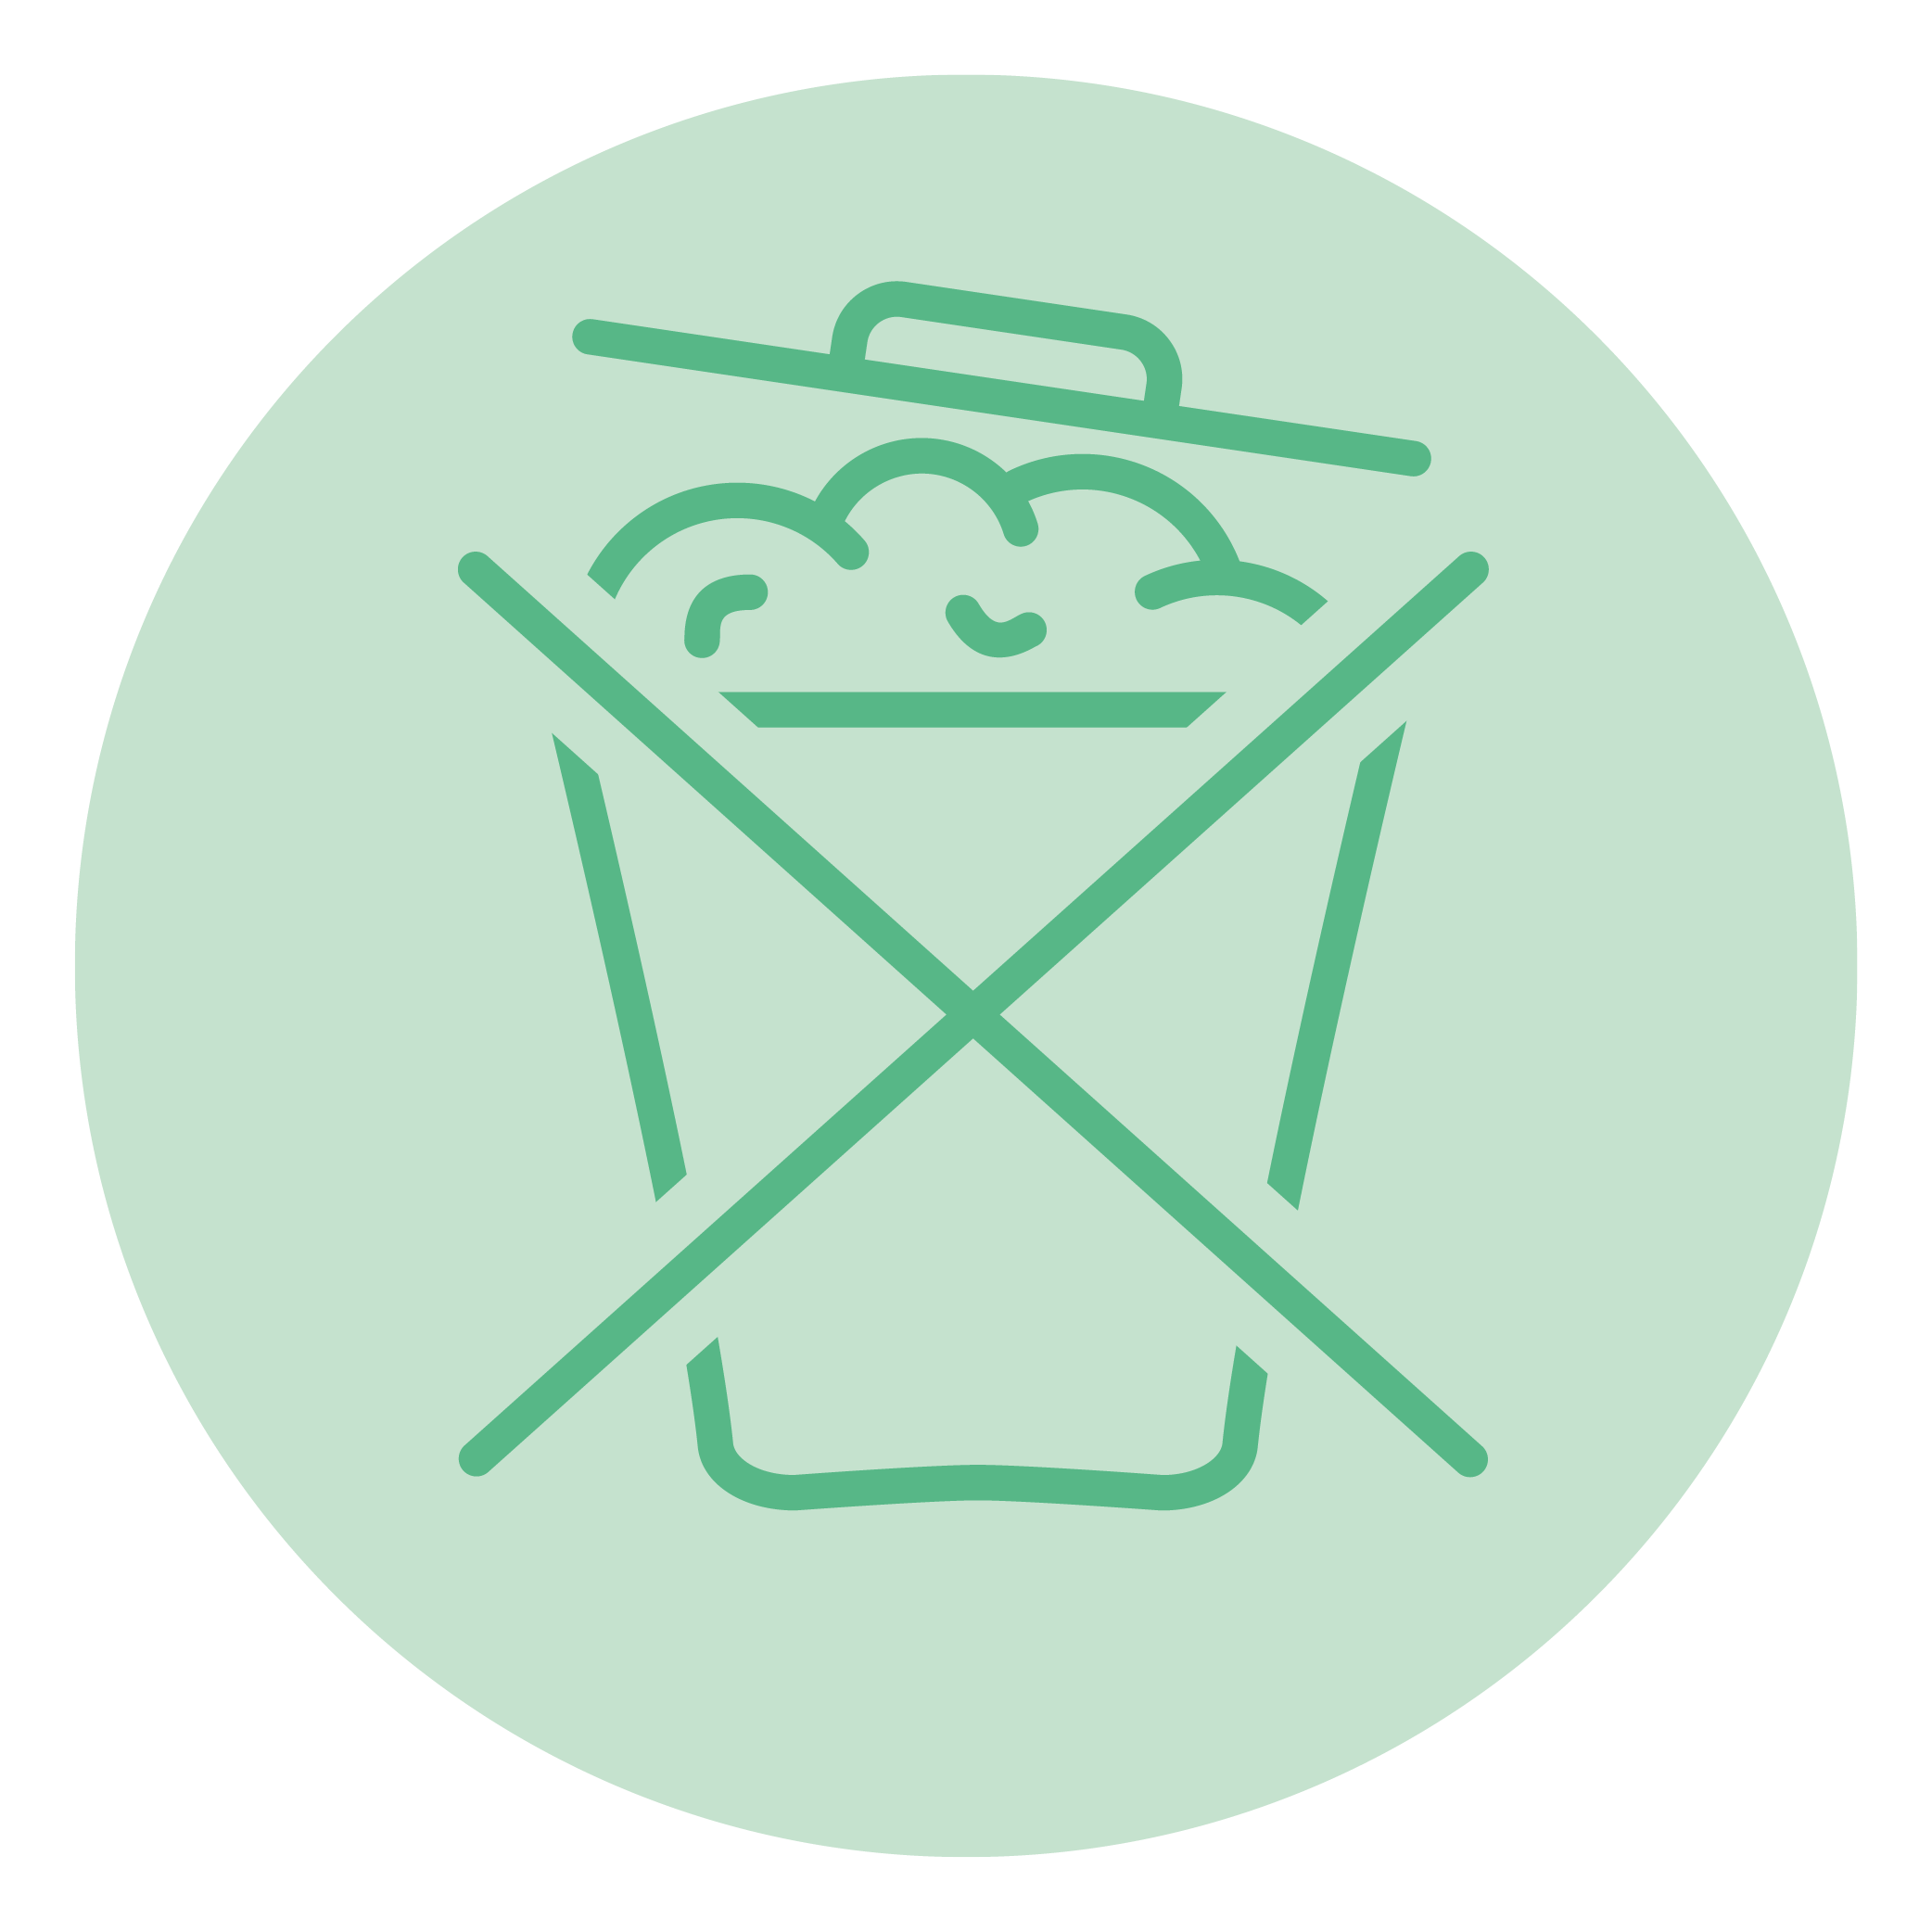 Illustrative icon of less waste